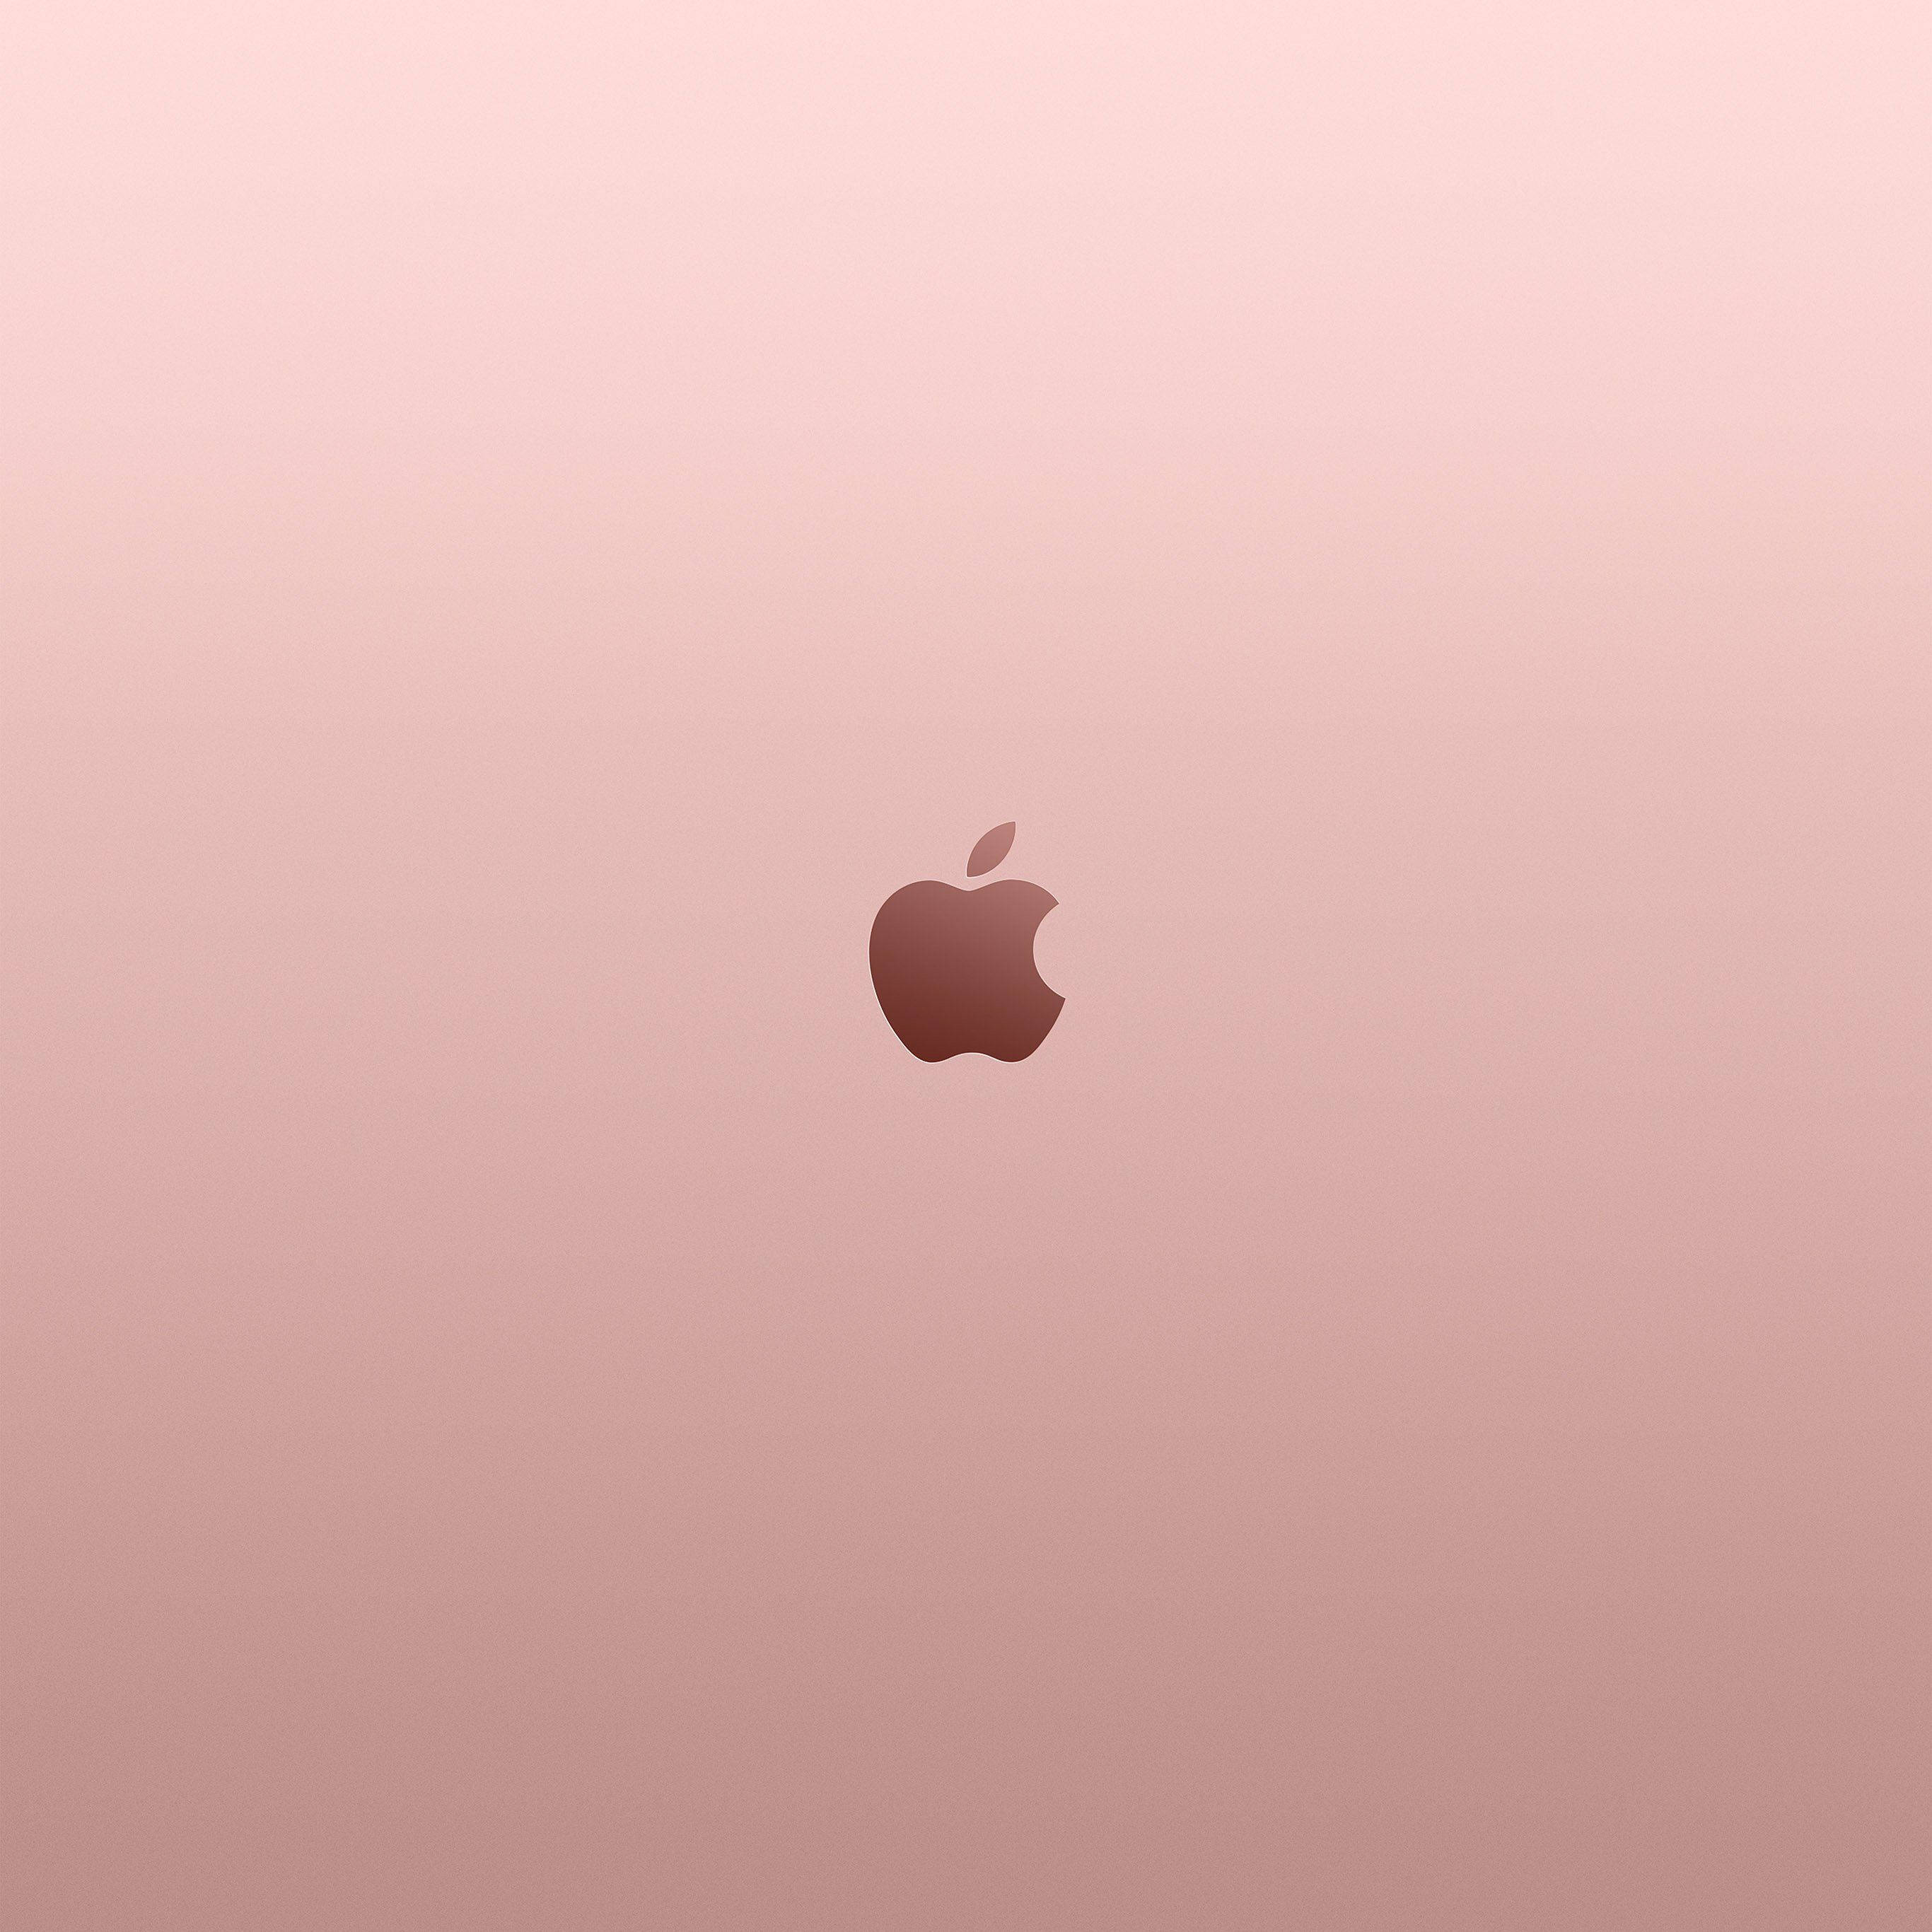 Rose Gold Tumblr Apple Logo Picture